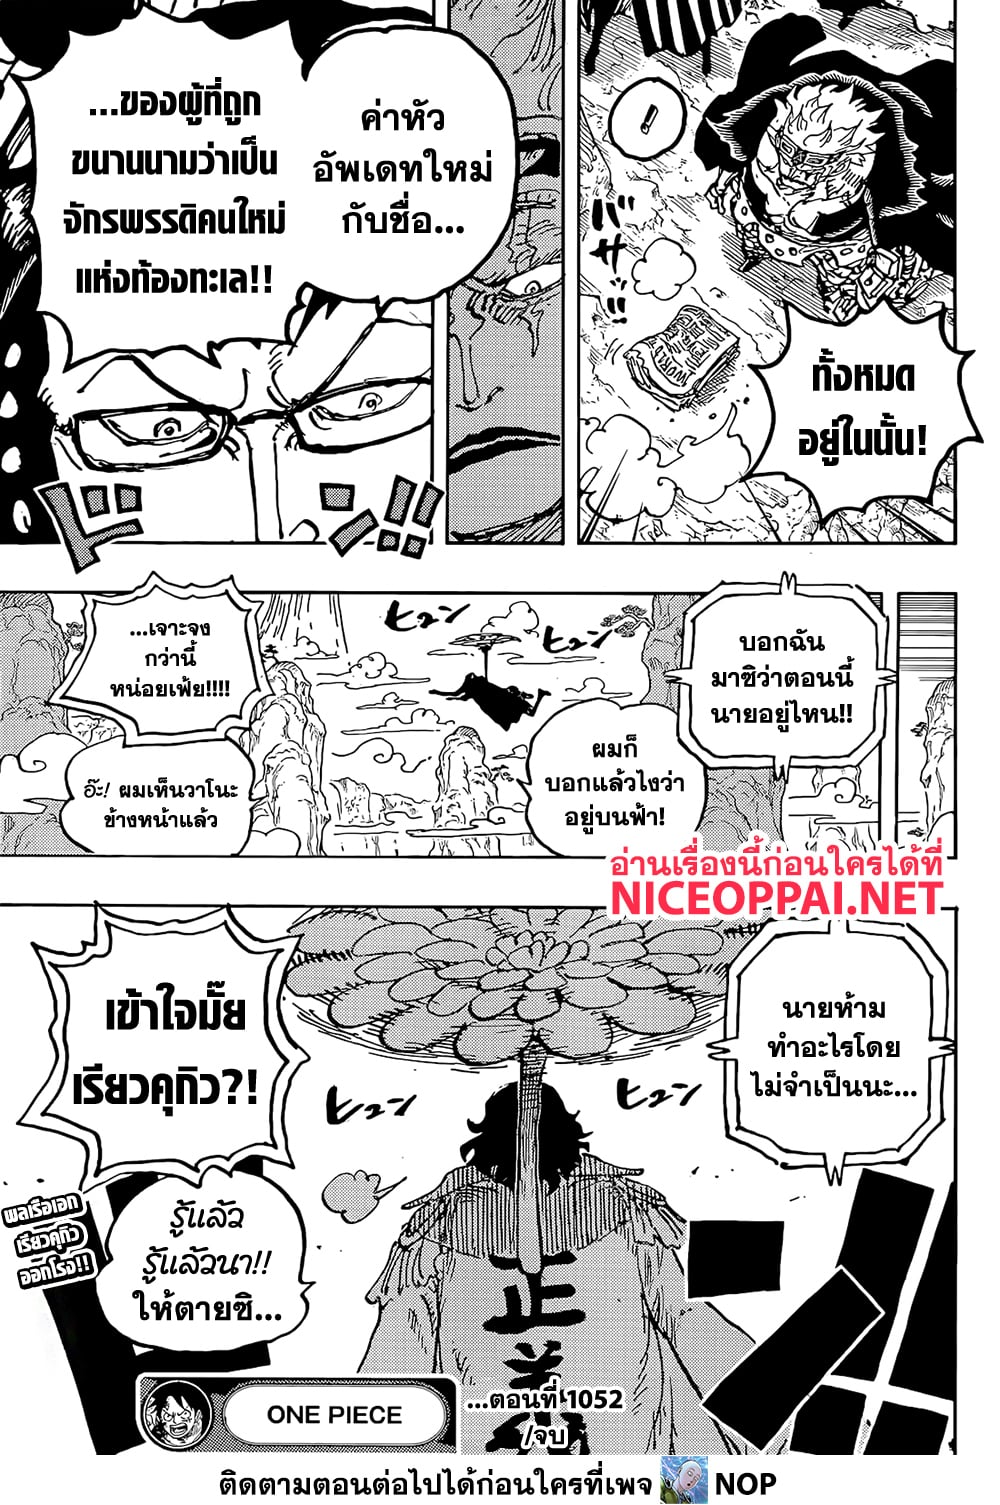 One Piece 1052 TH